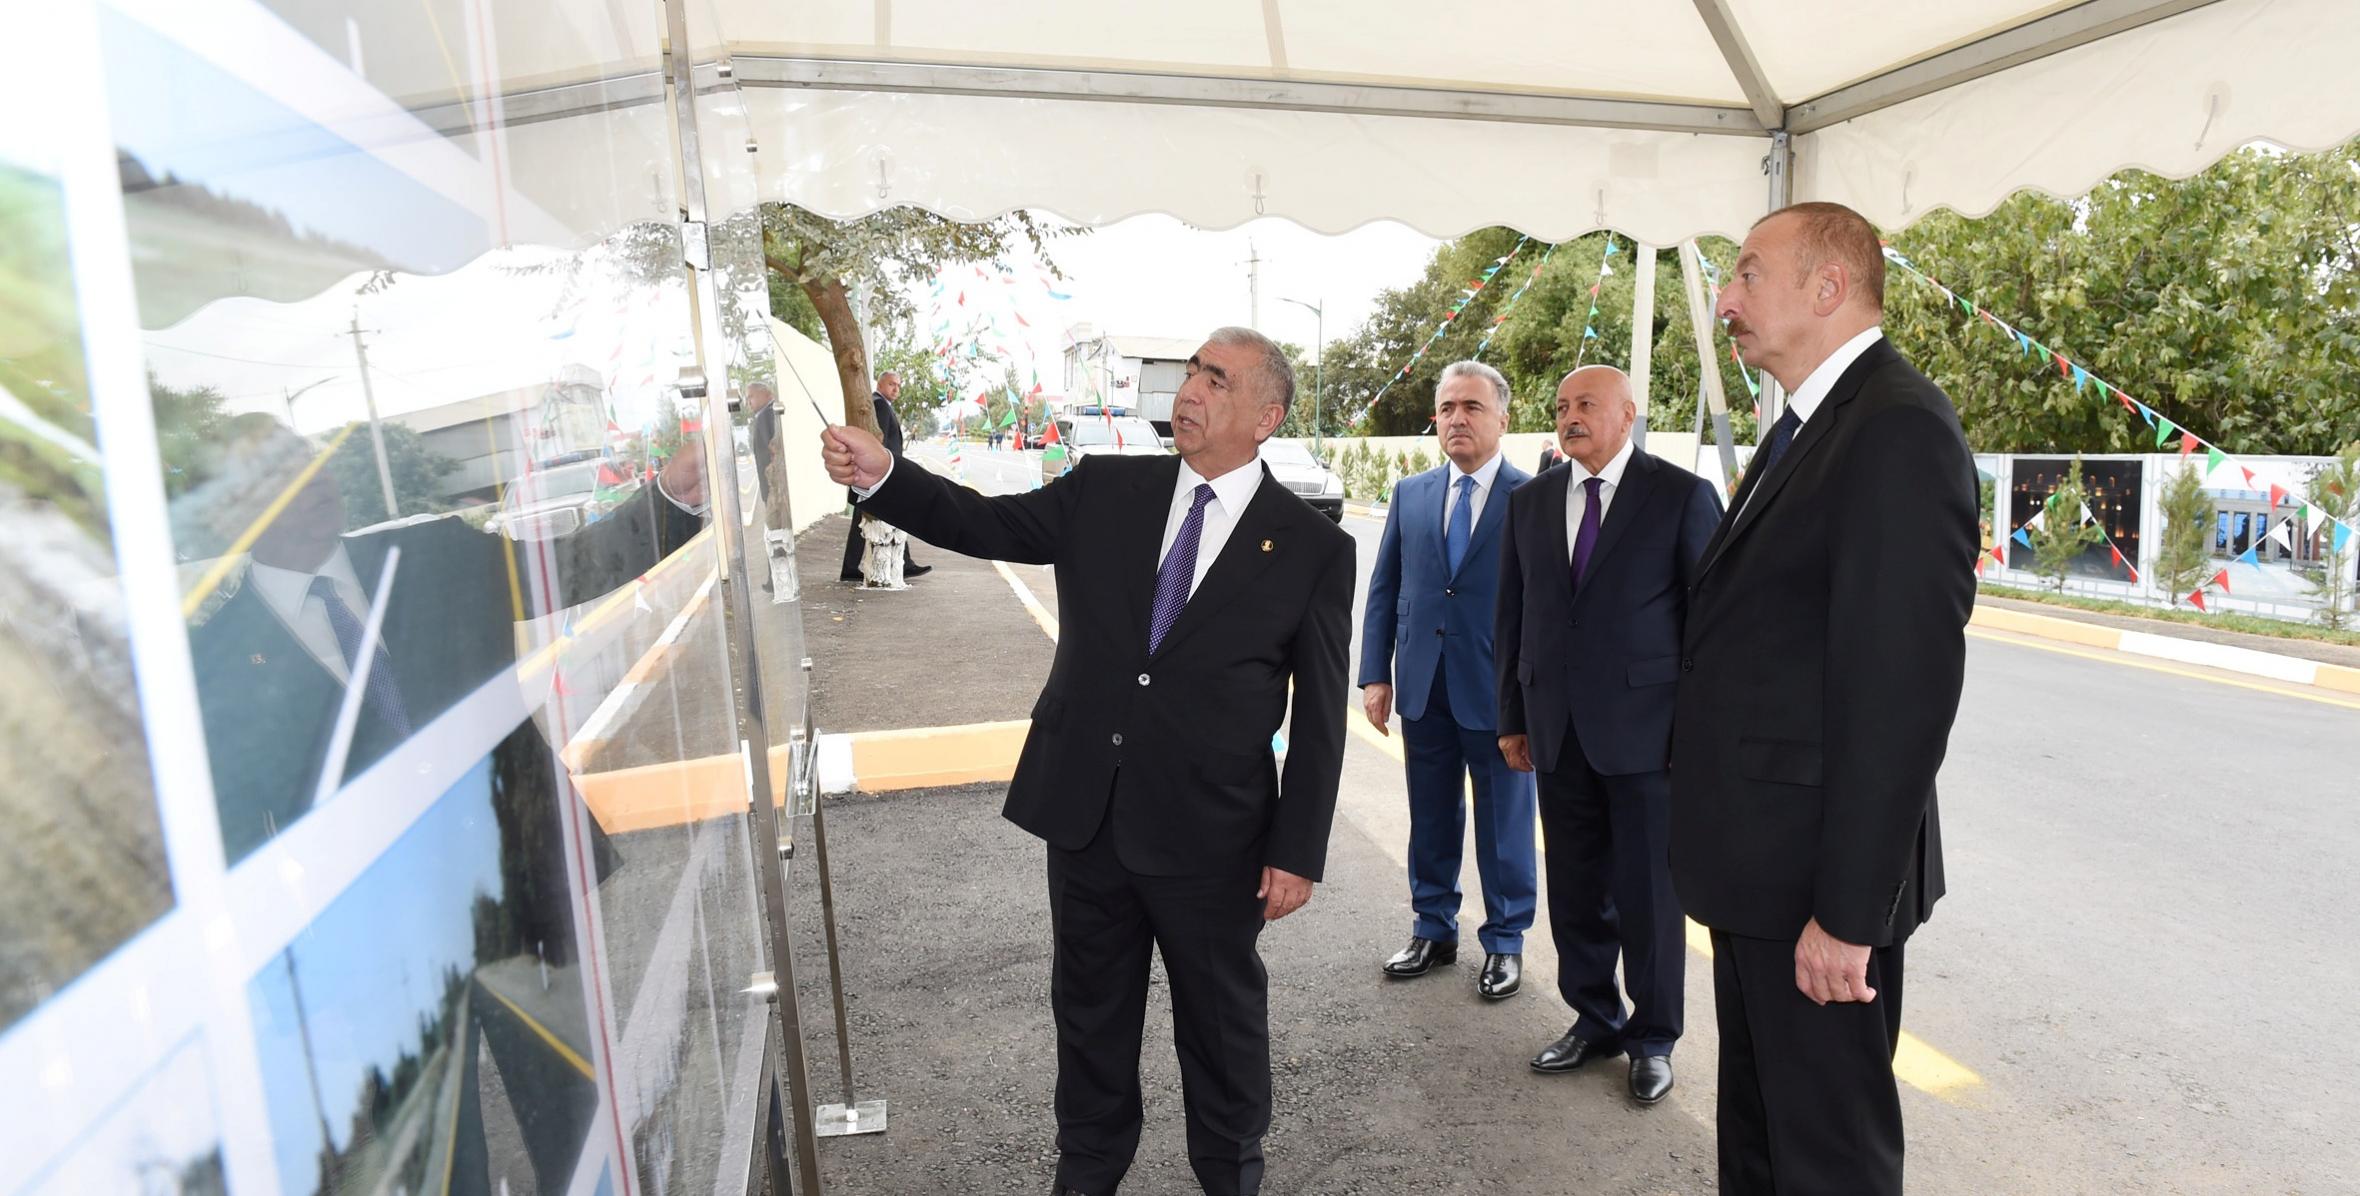 Ильхам Алиев принял участие в открытии автомобильной дороги Шатыроба-Хишкедере-Миянкю-Кубин-Биринджи Семидханлы-Халлыджалы-Эминли-Мамедханлы после капитальной реконструкции